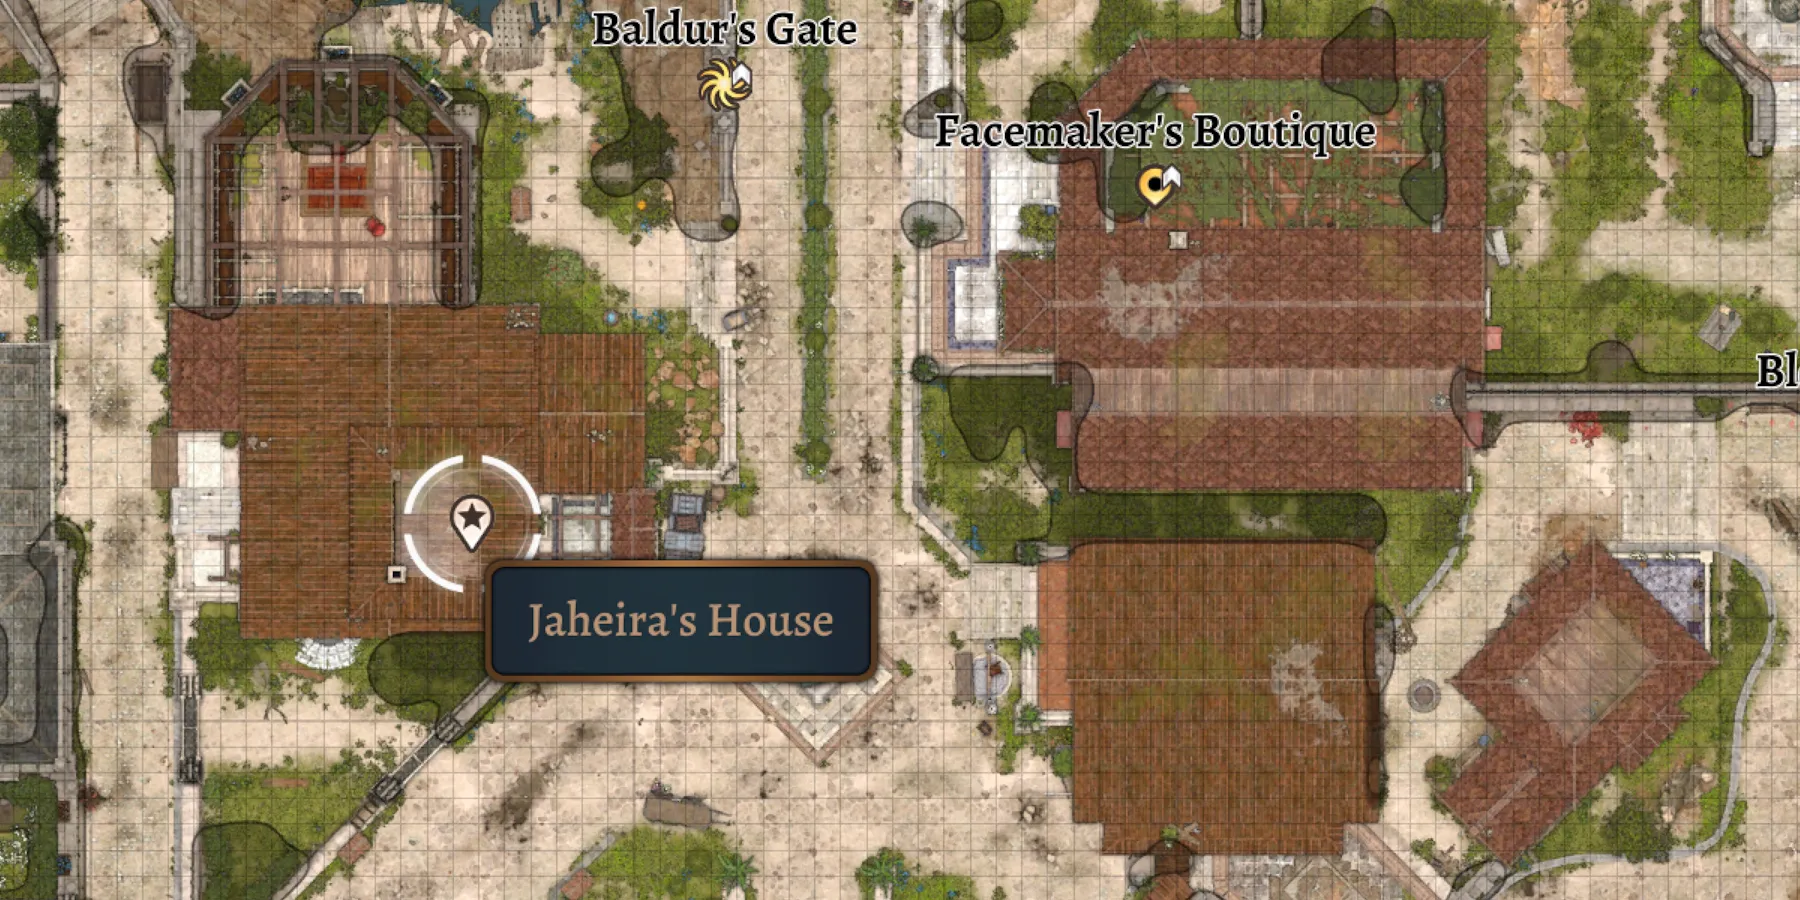 Casa de Jaheira